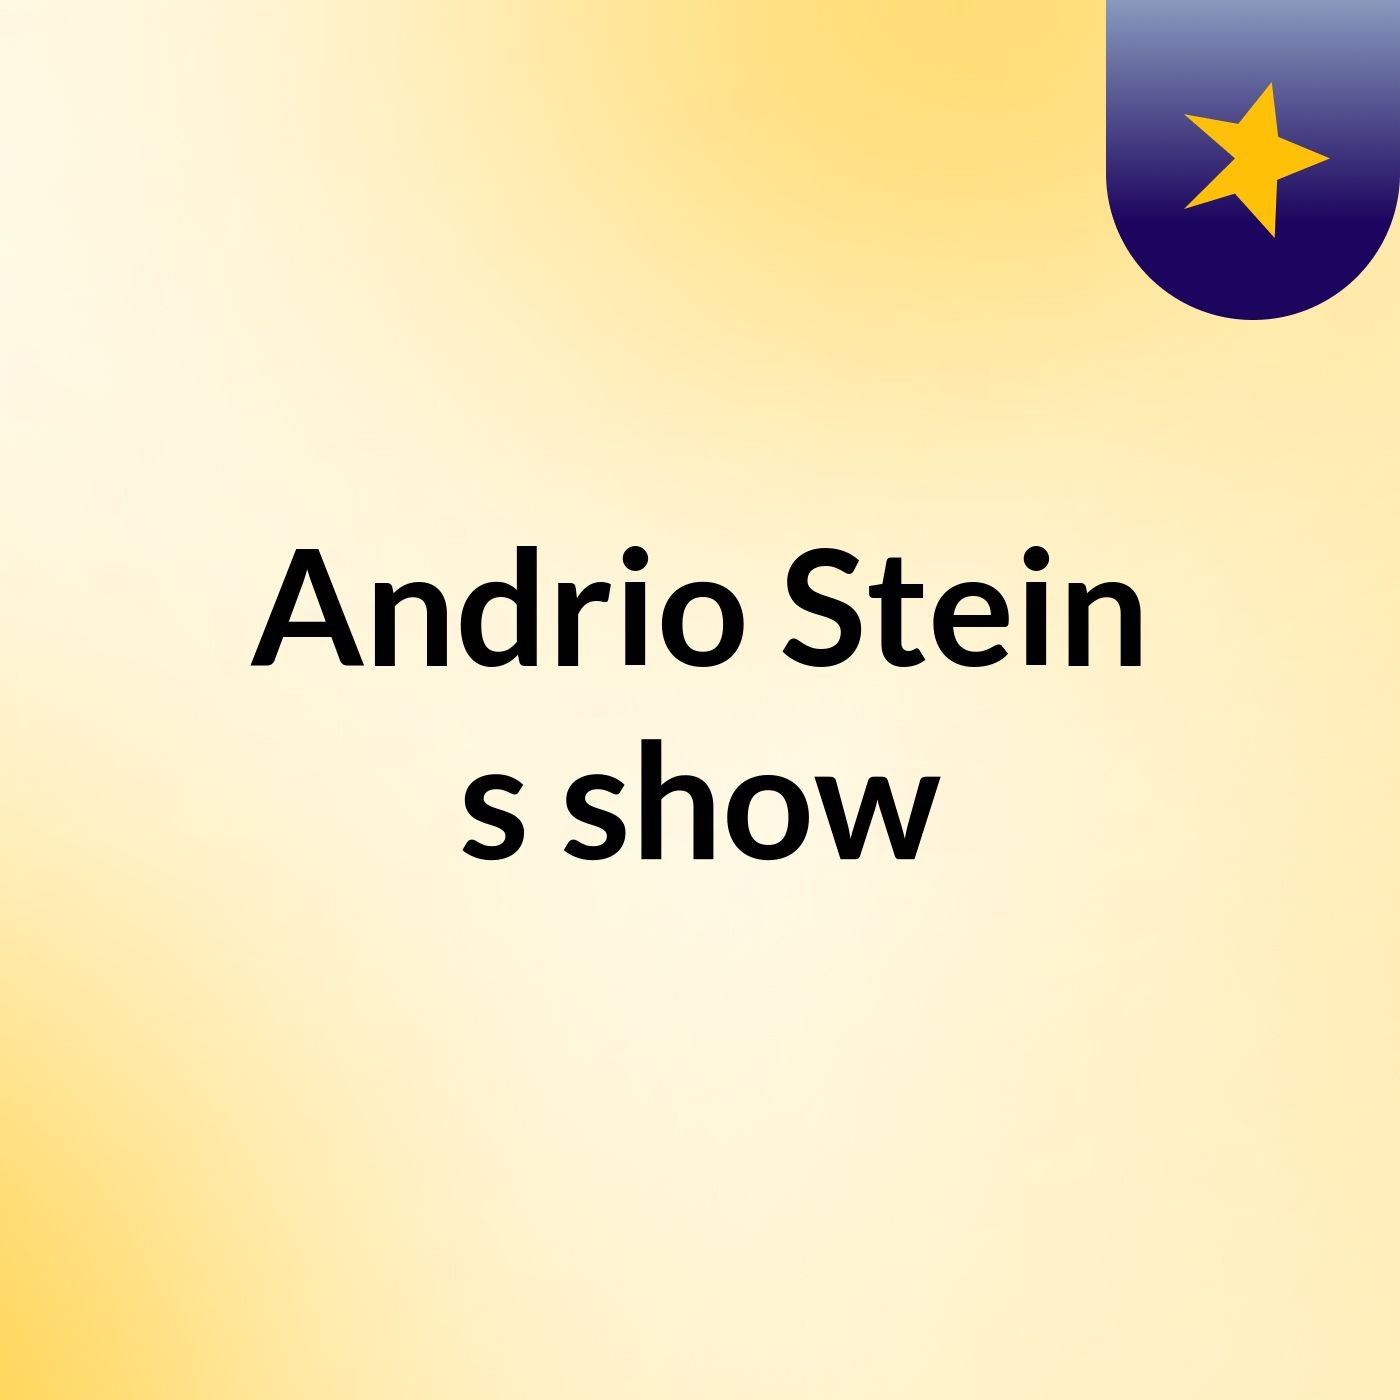 Andrio Stein's show